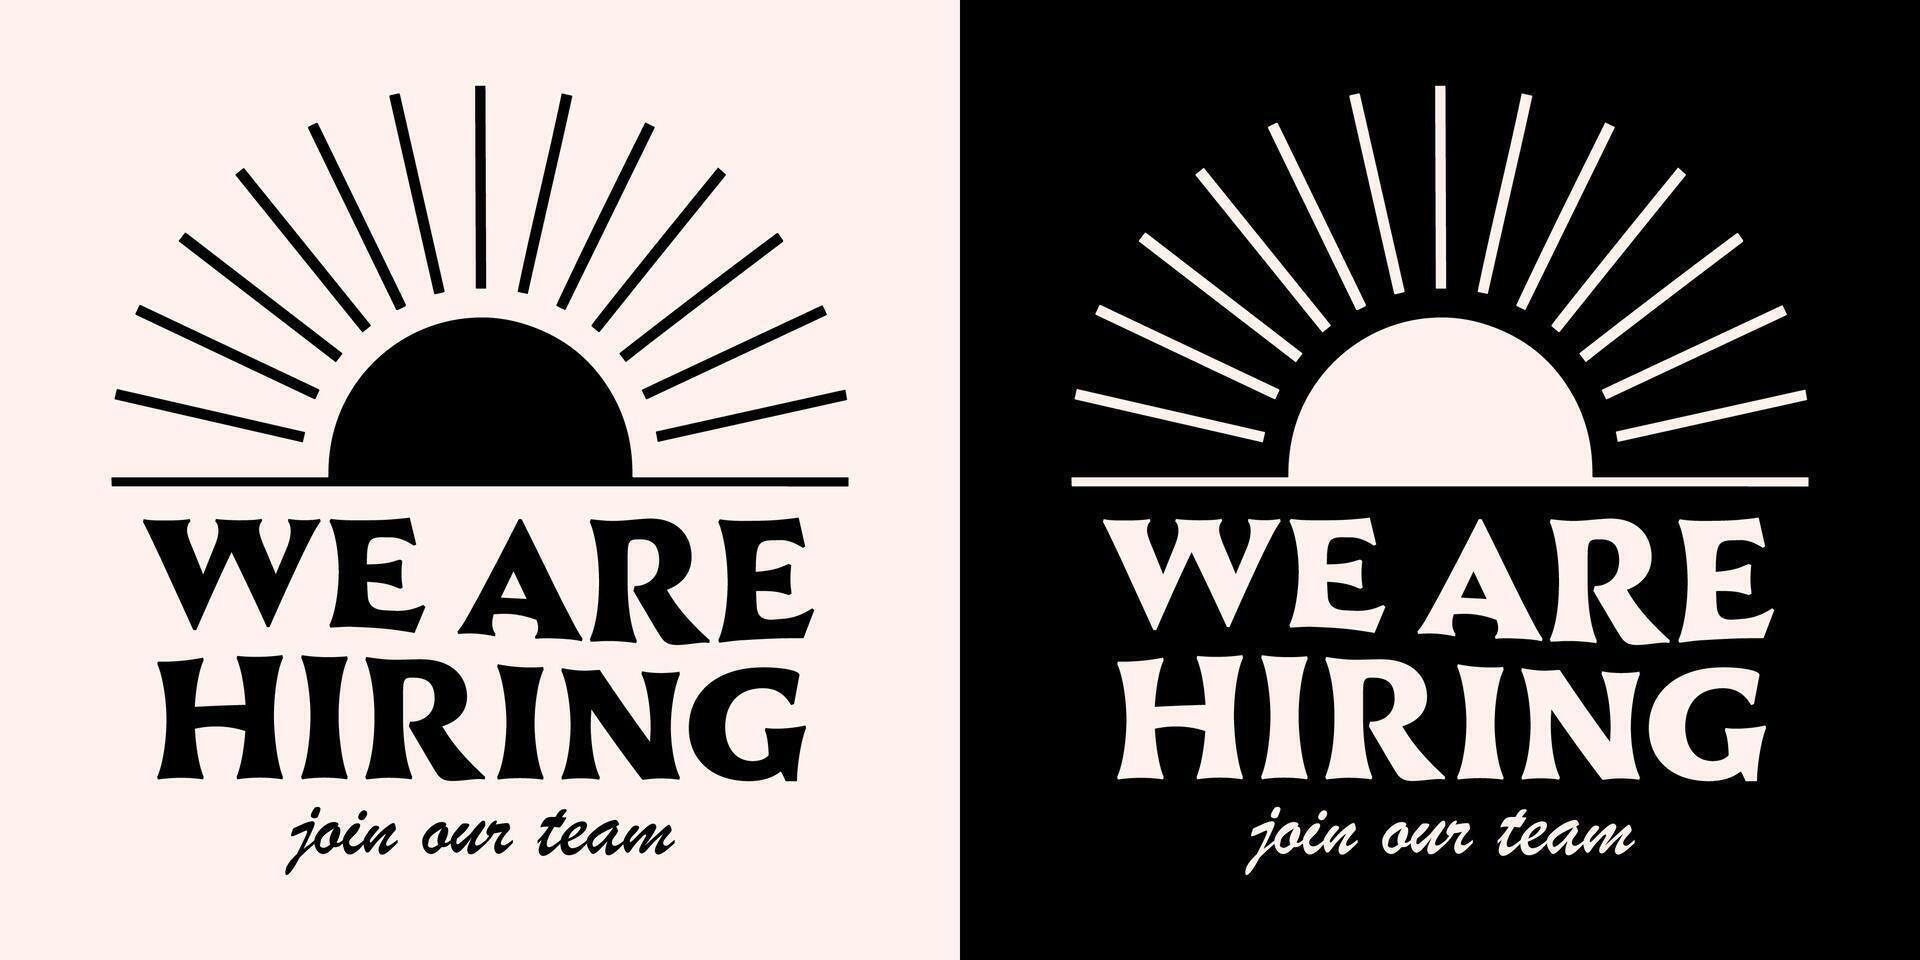 We are hiring work job recruiting announcement social media post text for beach ocean business shop company retro boho sun summer aesthetic vector